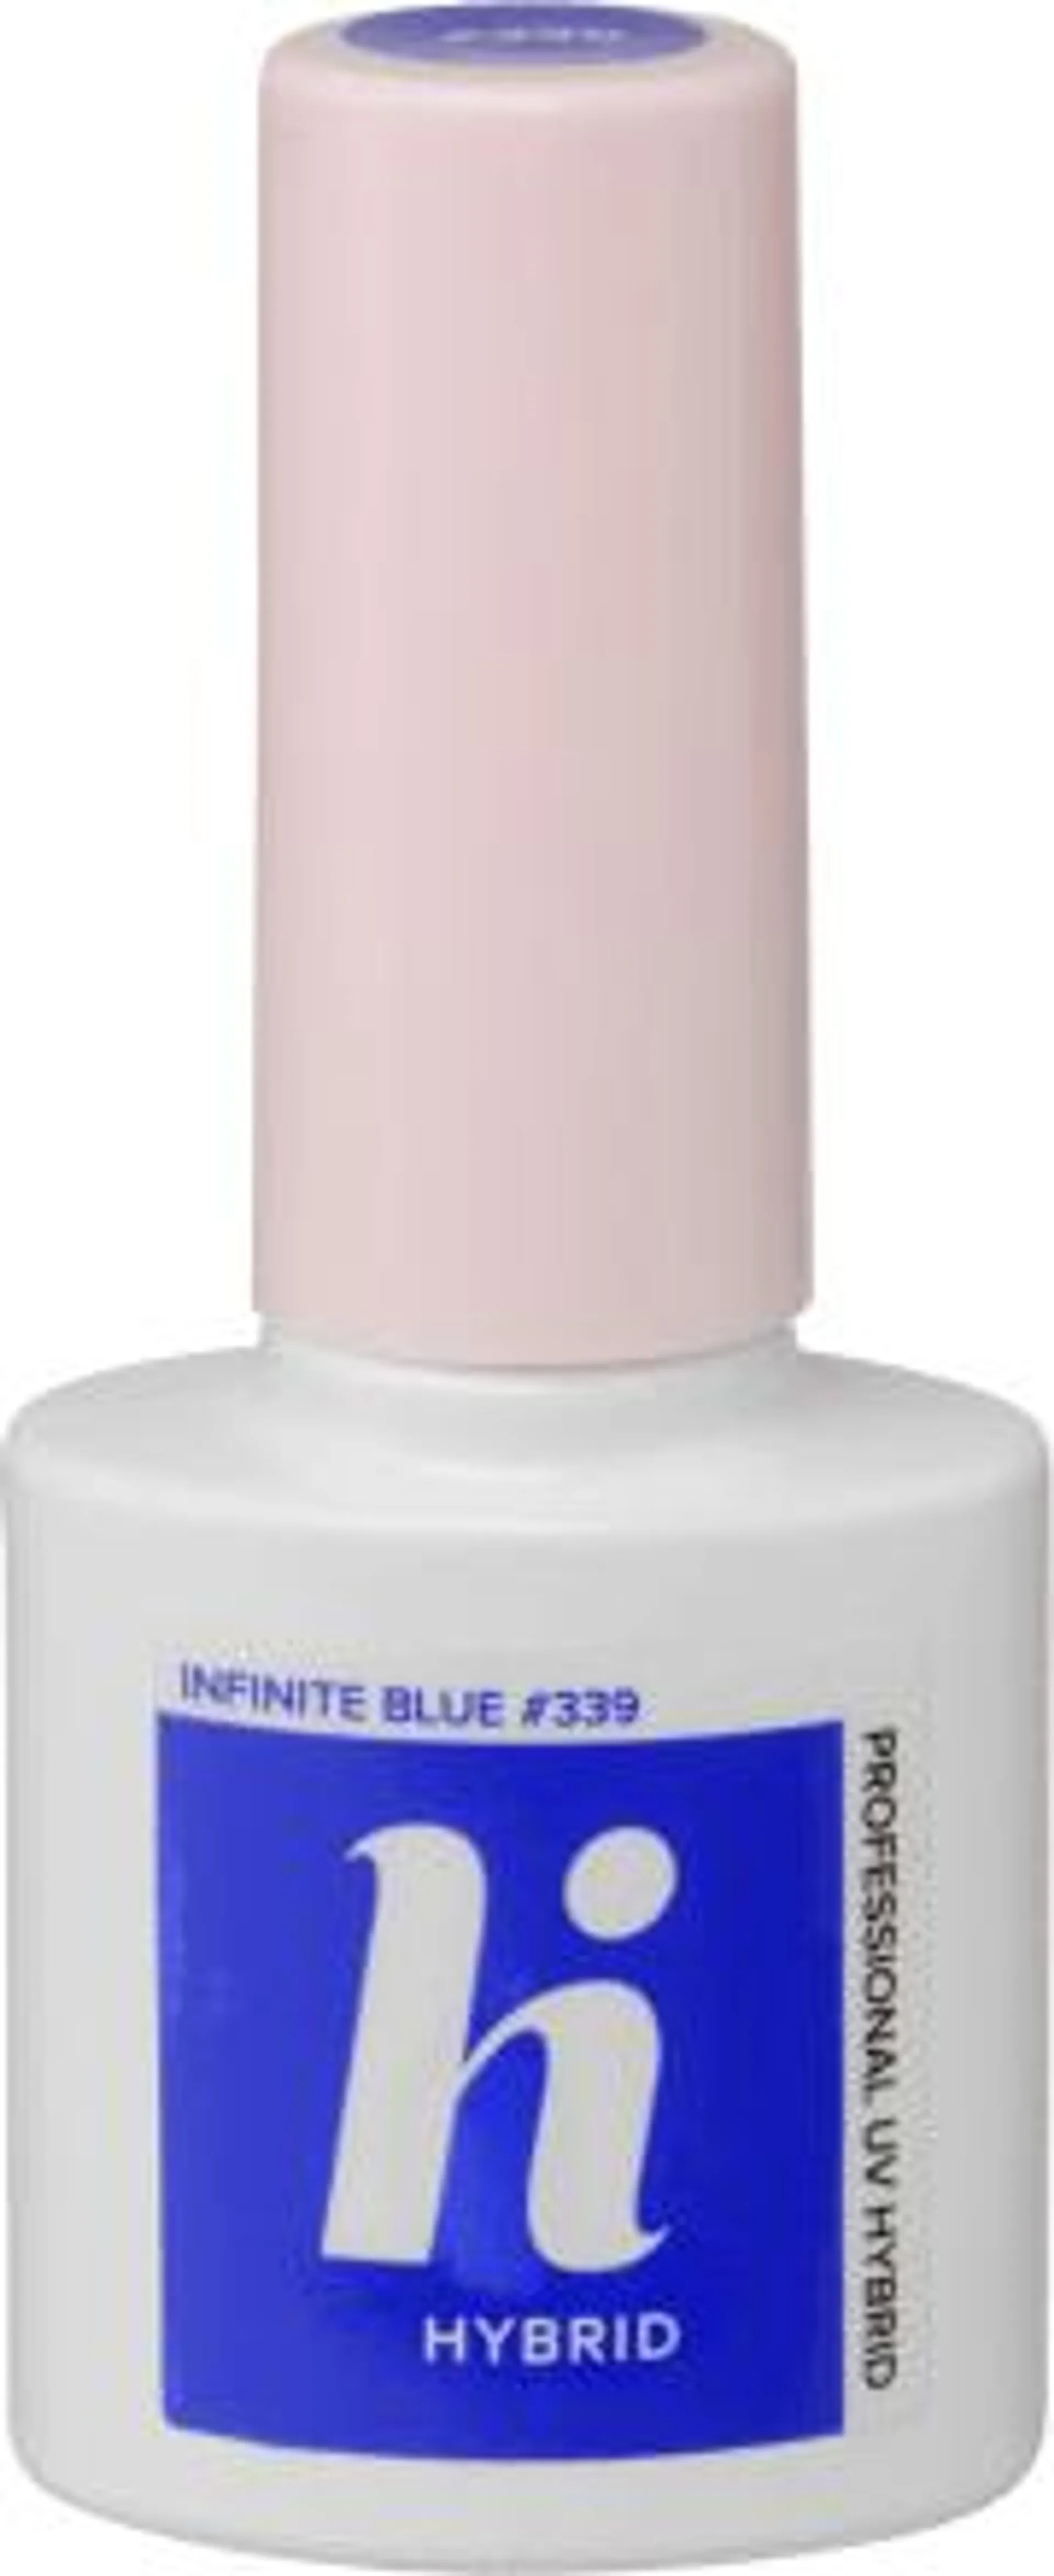 UV gél lakk - Nr. 339 Infinite Blue, 5 ml